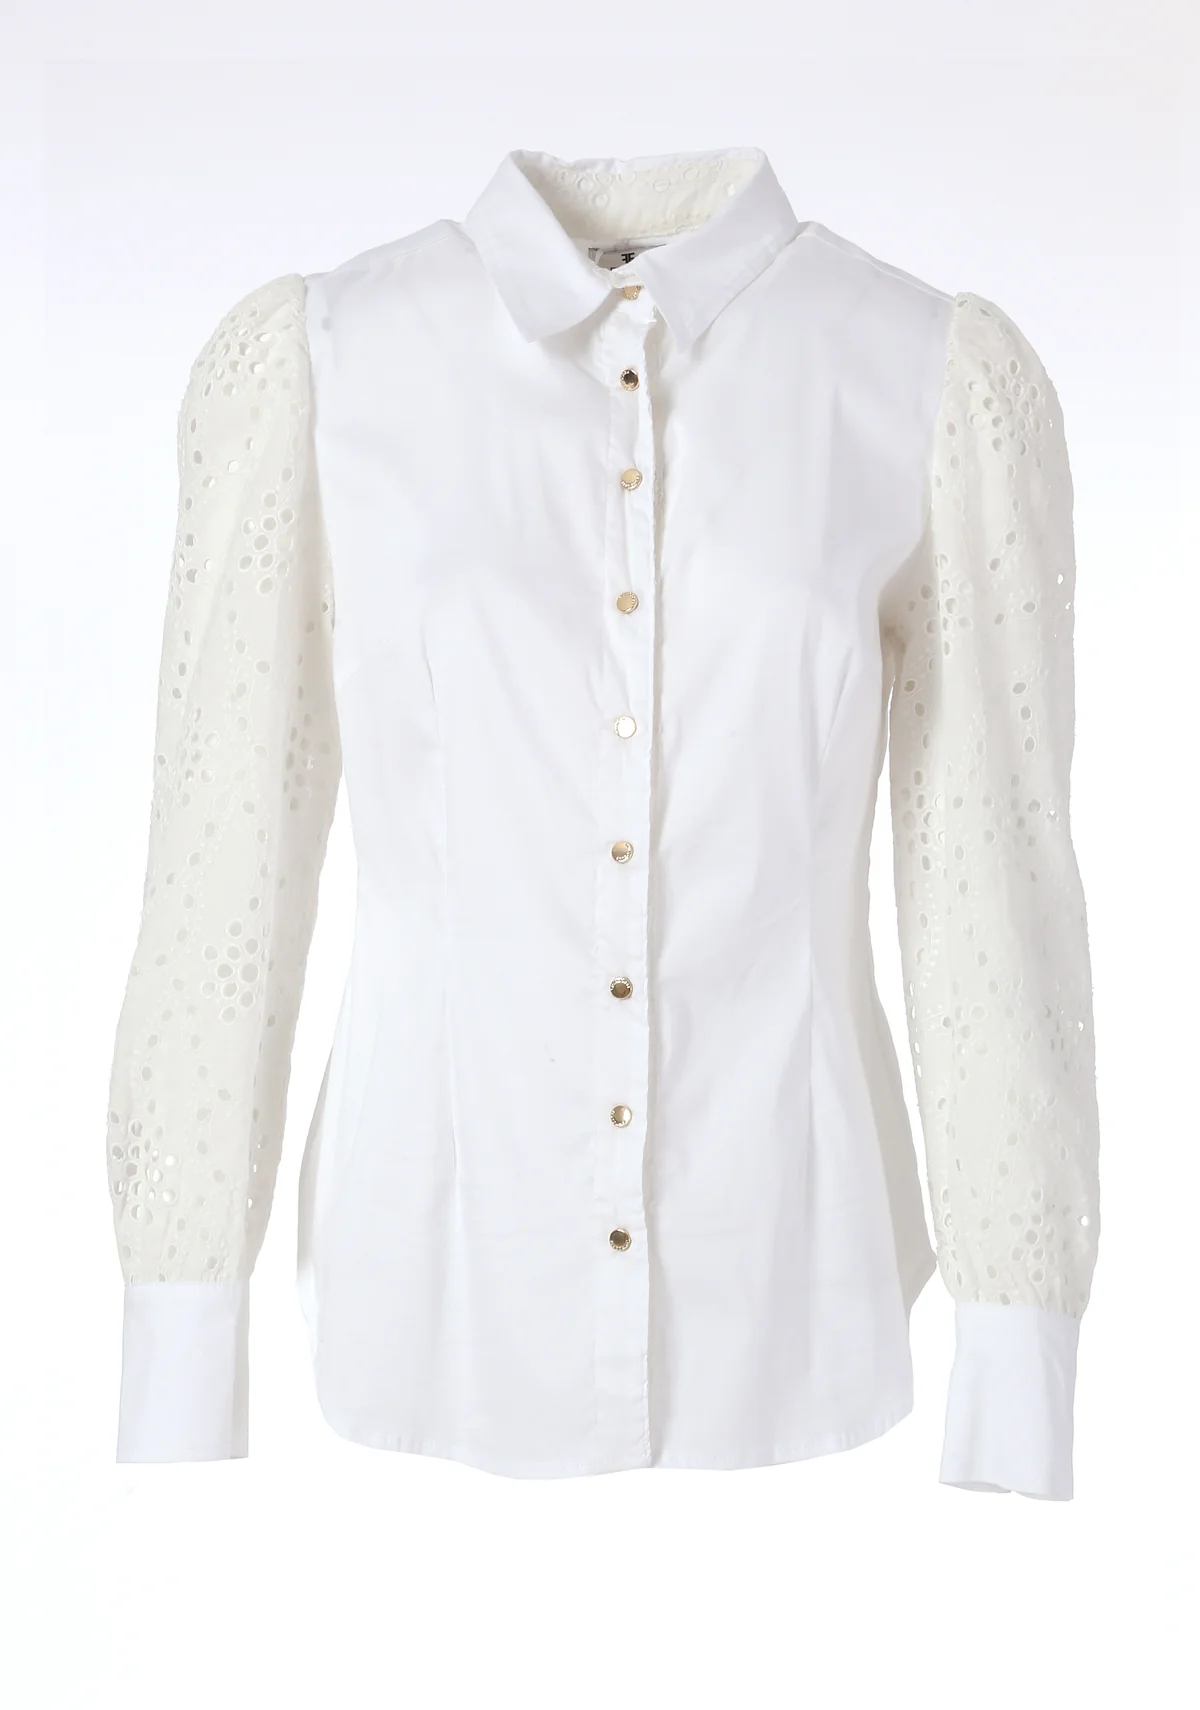 FRACOMINA camisa blanca con manga bordada